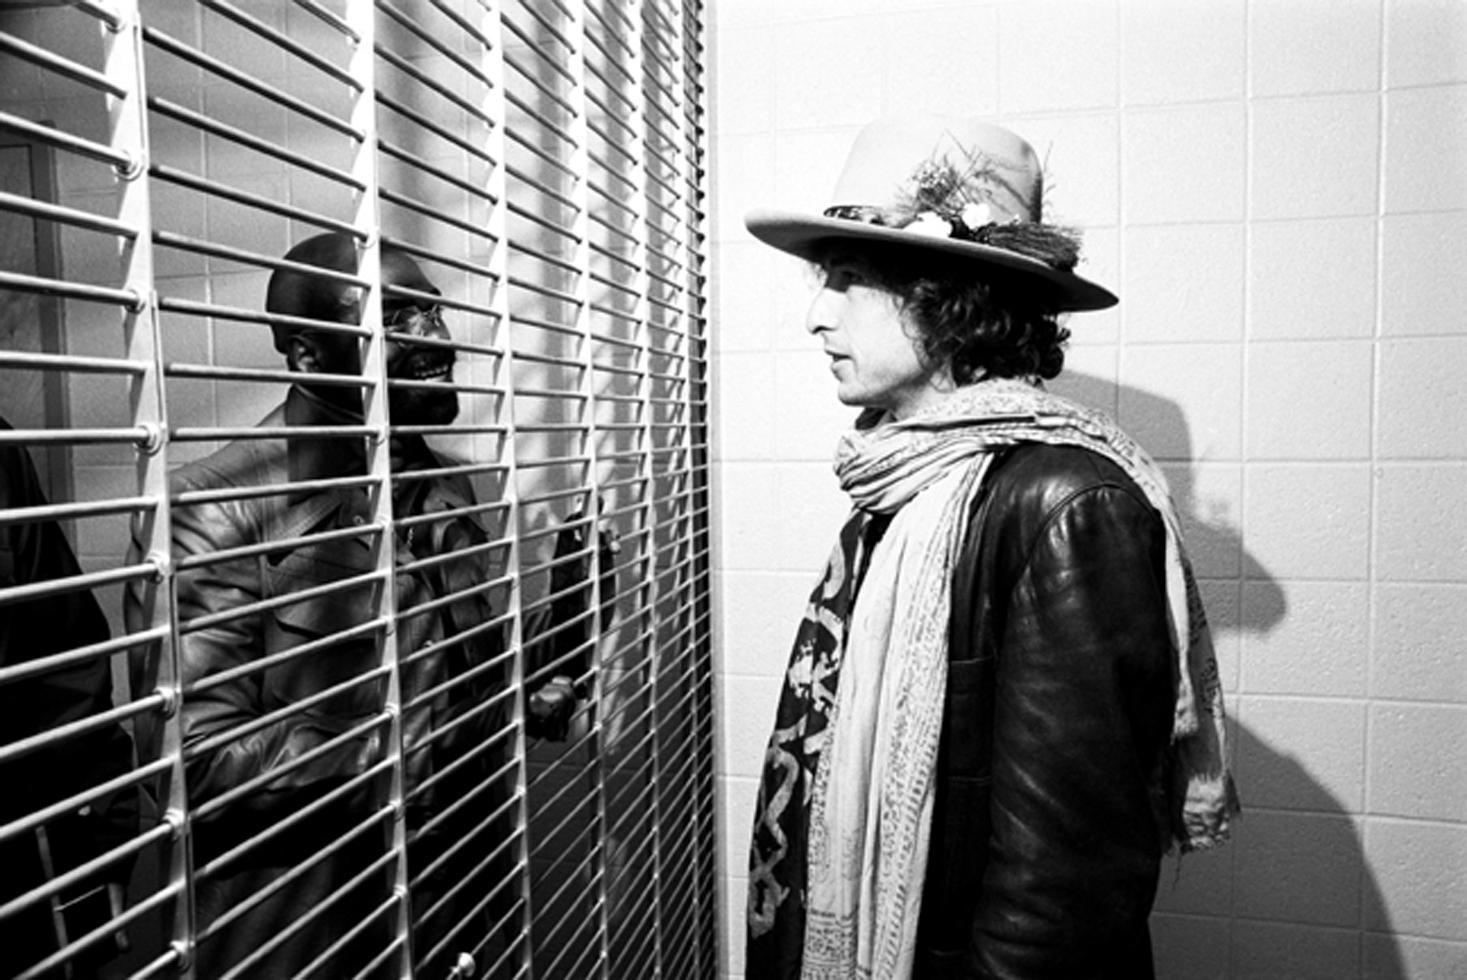 Ken Regan Black and White Photograph - Rubin "The Hurricane" Carter and Bob Dylan, NJ, 1975